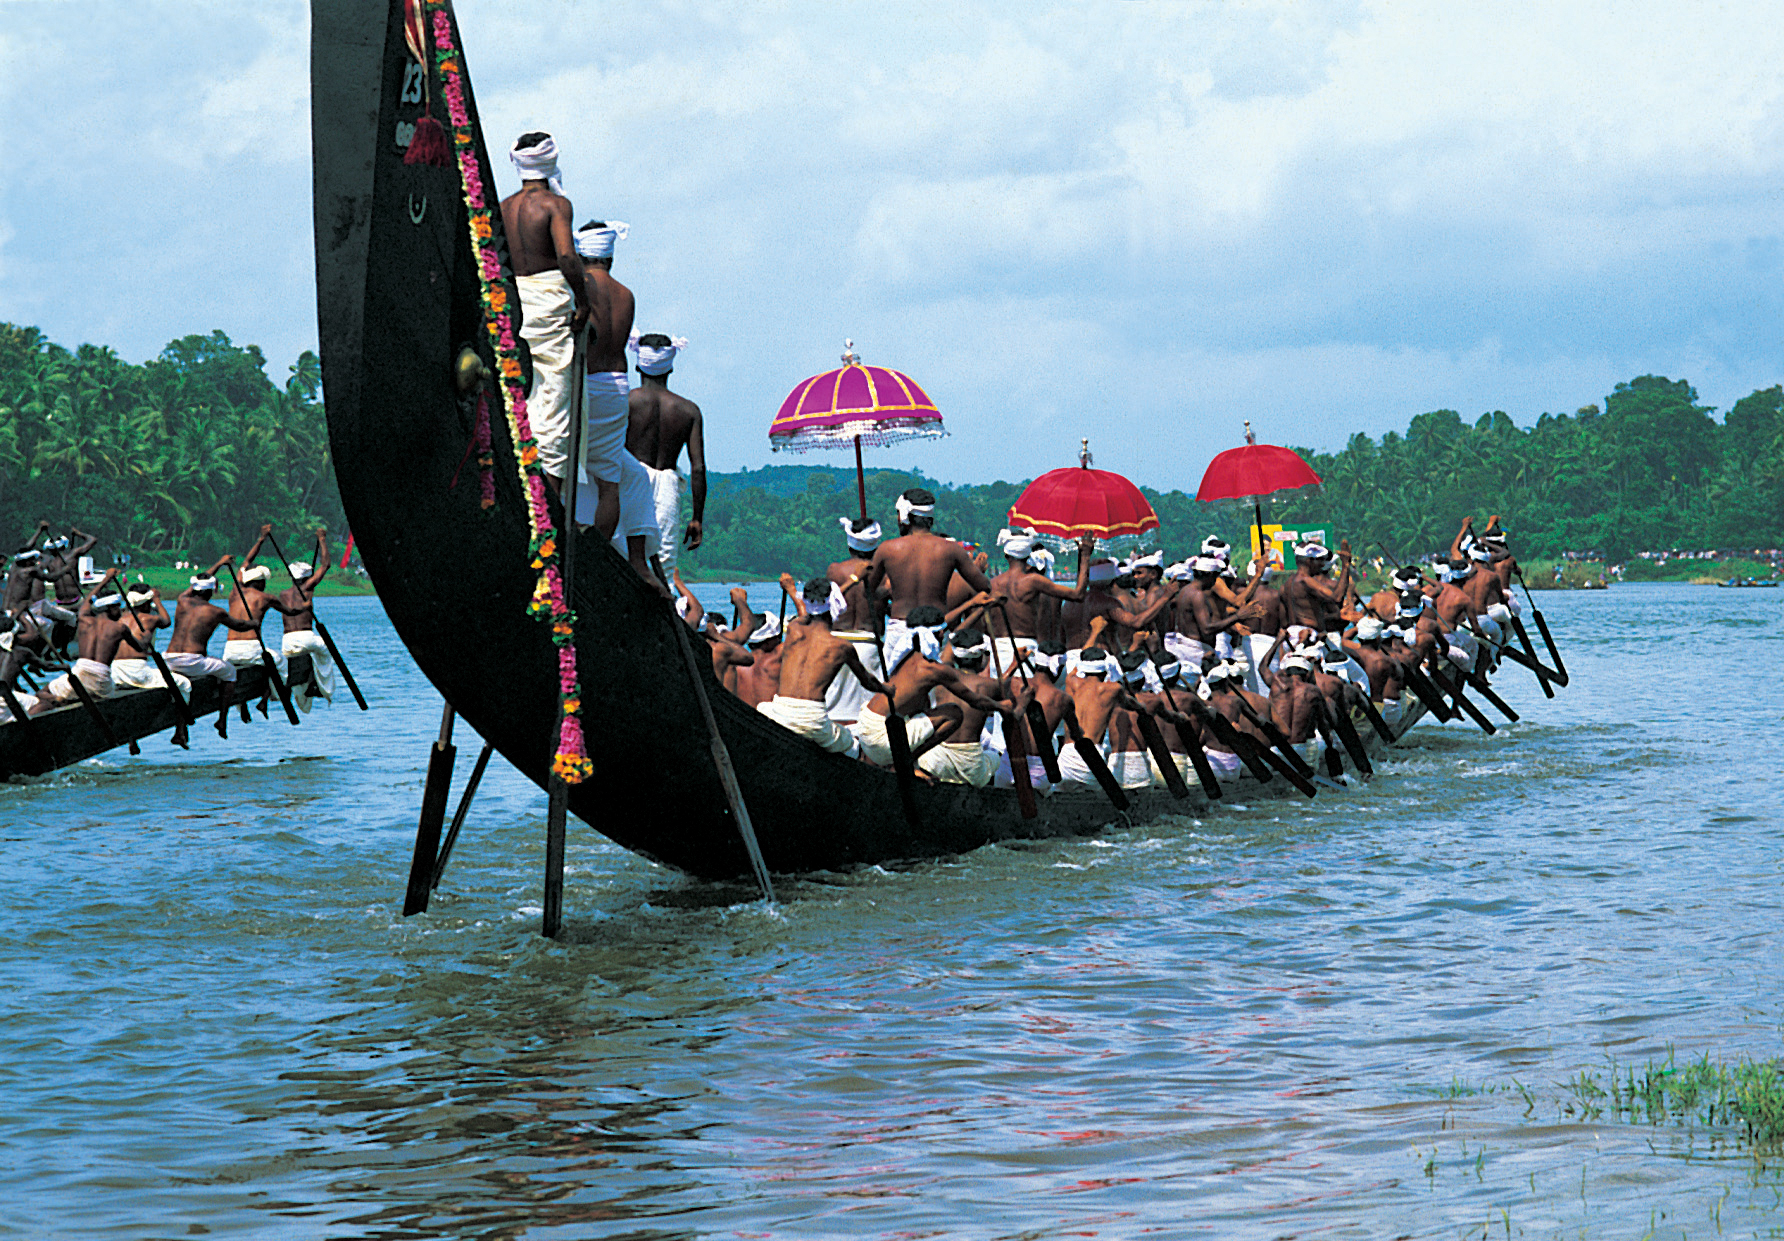 Vllamkali - Boat Race in Kerala during Onam